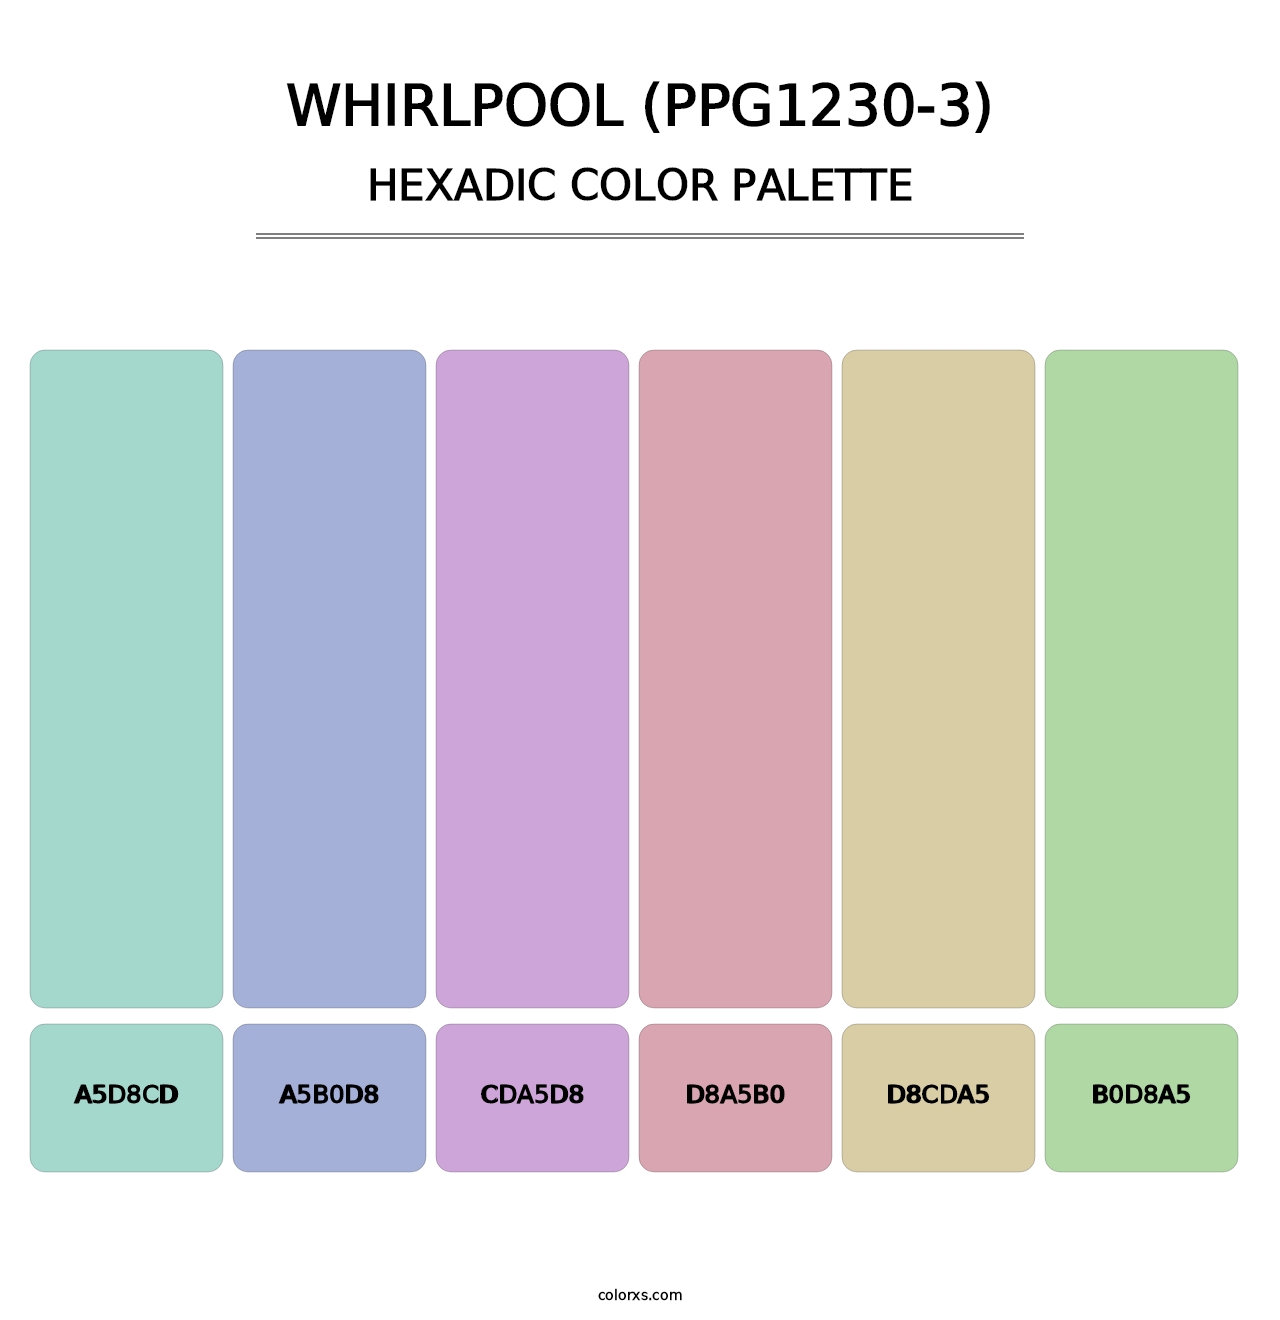 Whirlpool (PPG1230-3) - Hexadic Color Palette